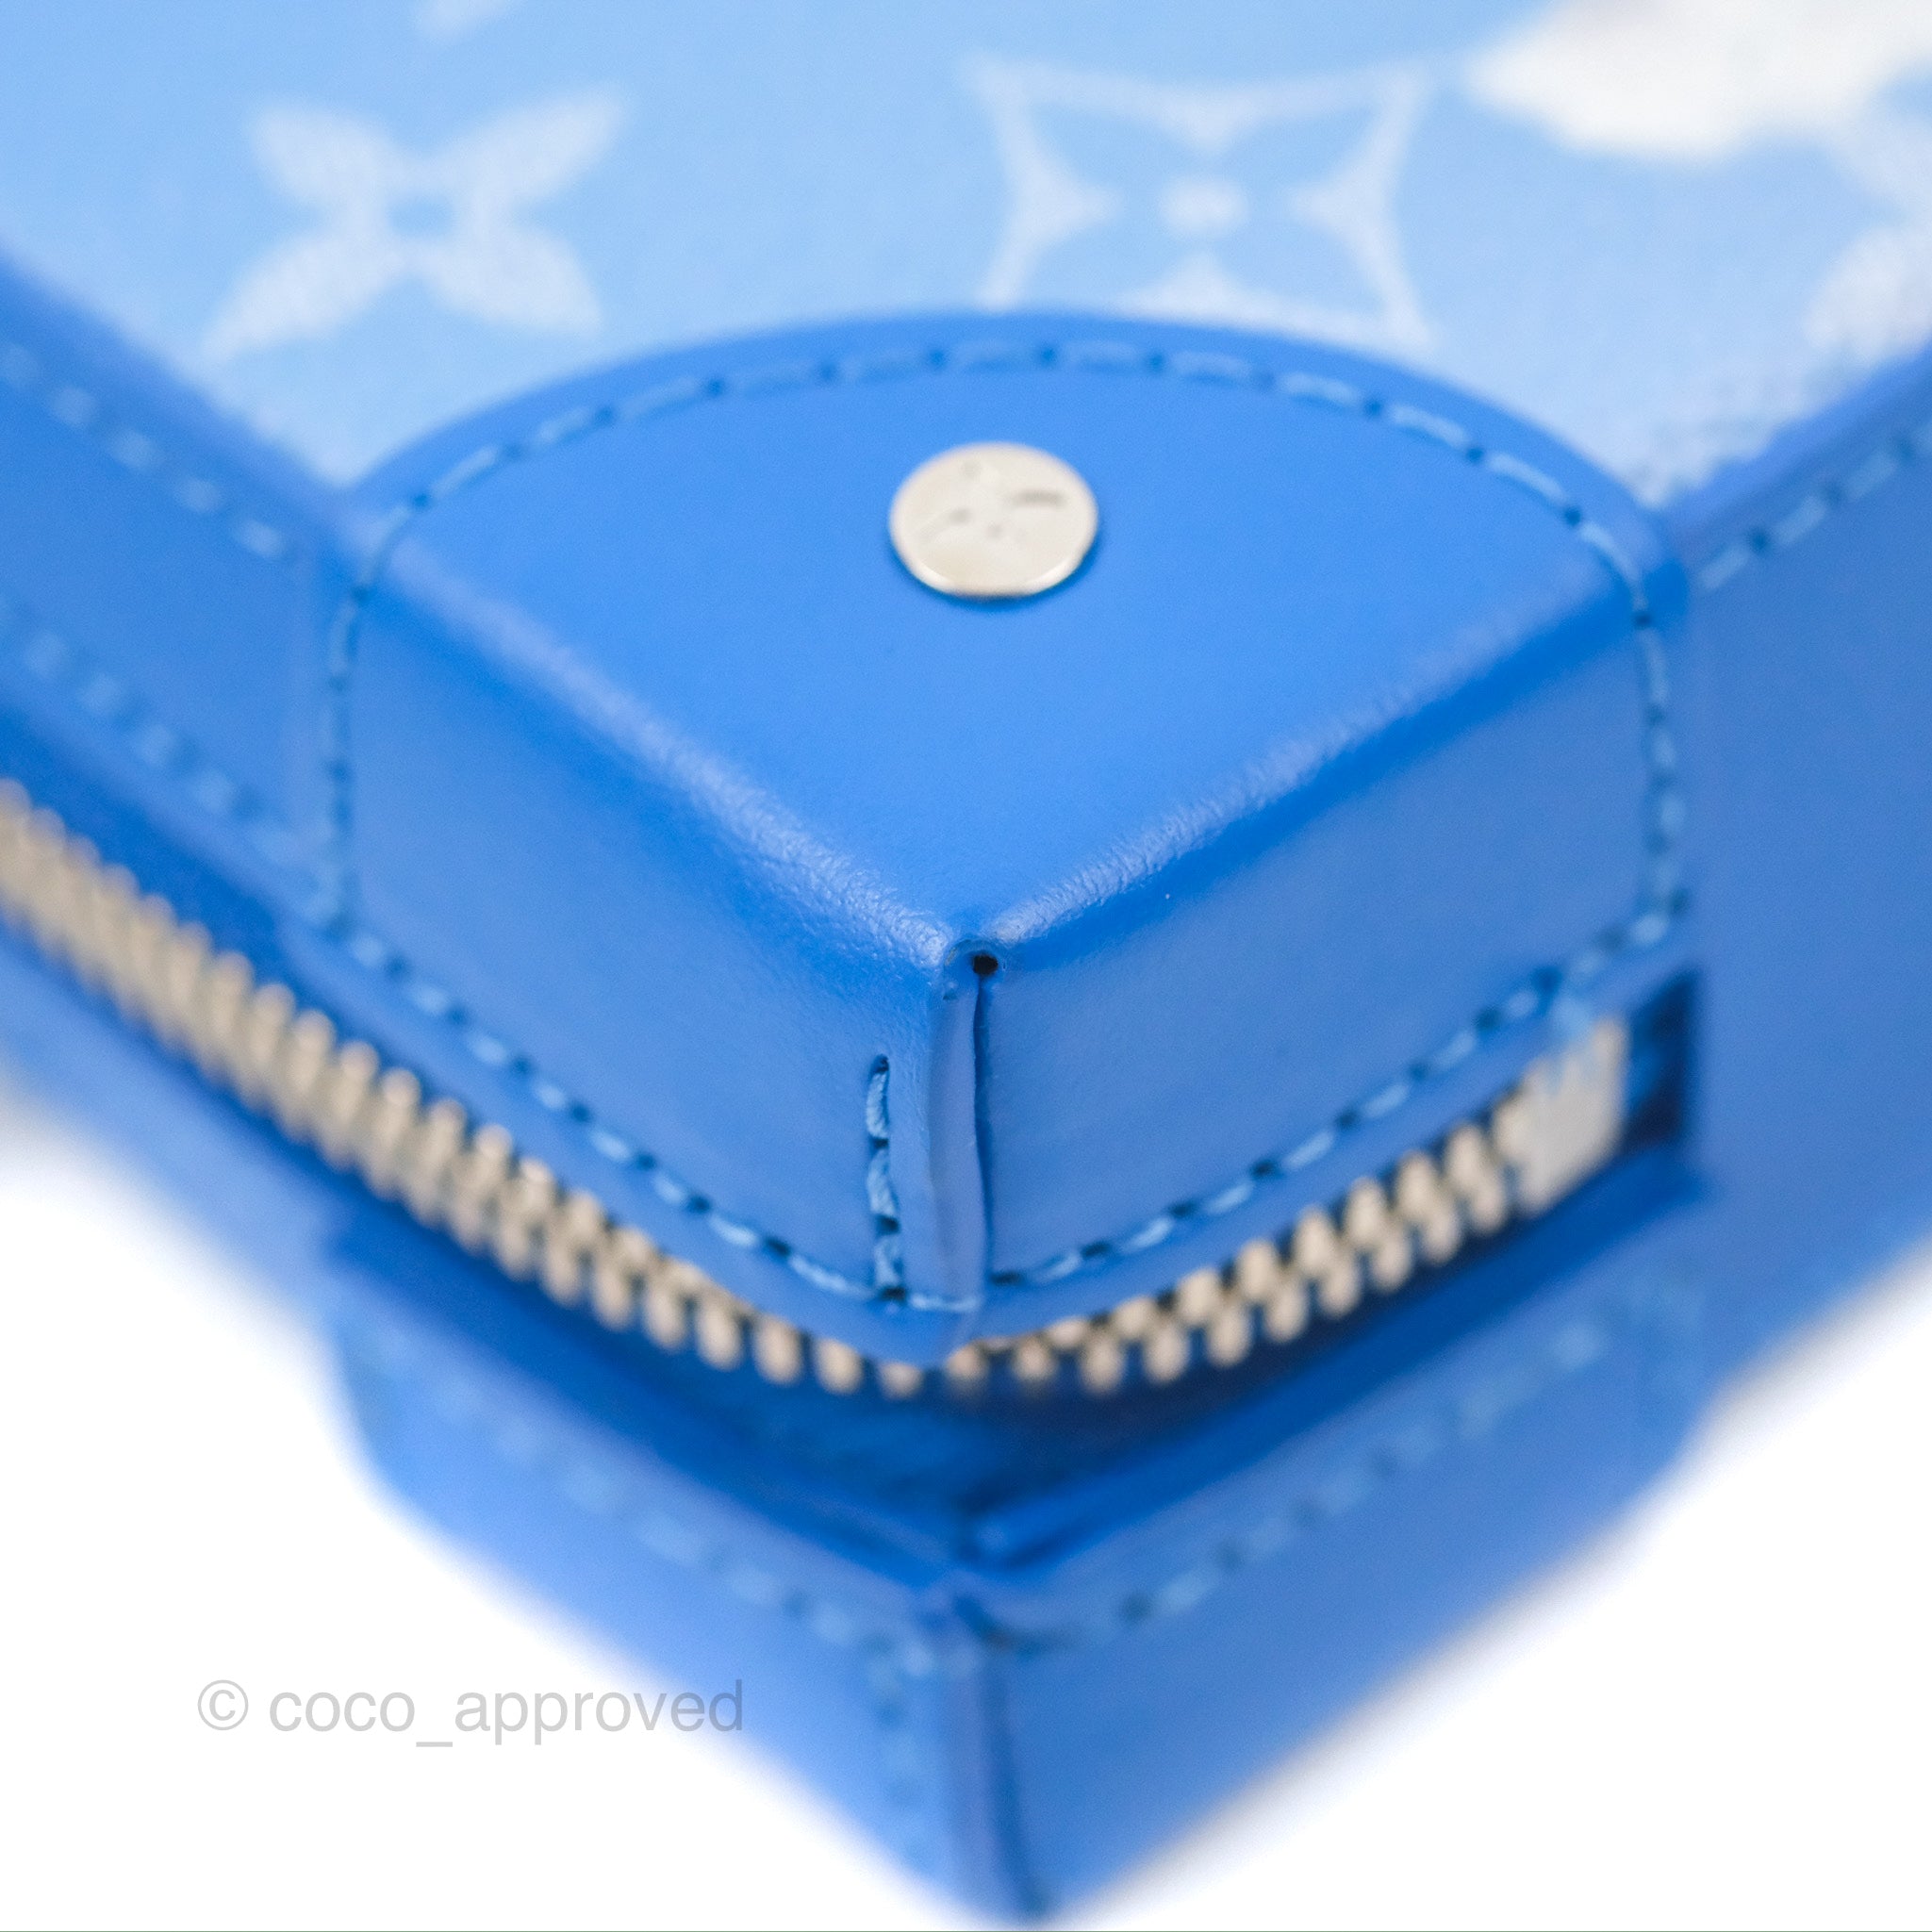 Louis Vuitton Virgil Abloh Blue Monogram Clouds Coated Canvas Soft Trunk Wallet Silver Hardware, 2020 (Very Good), Handbag